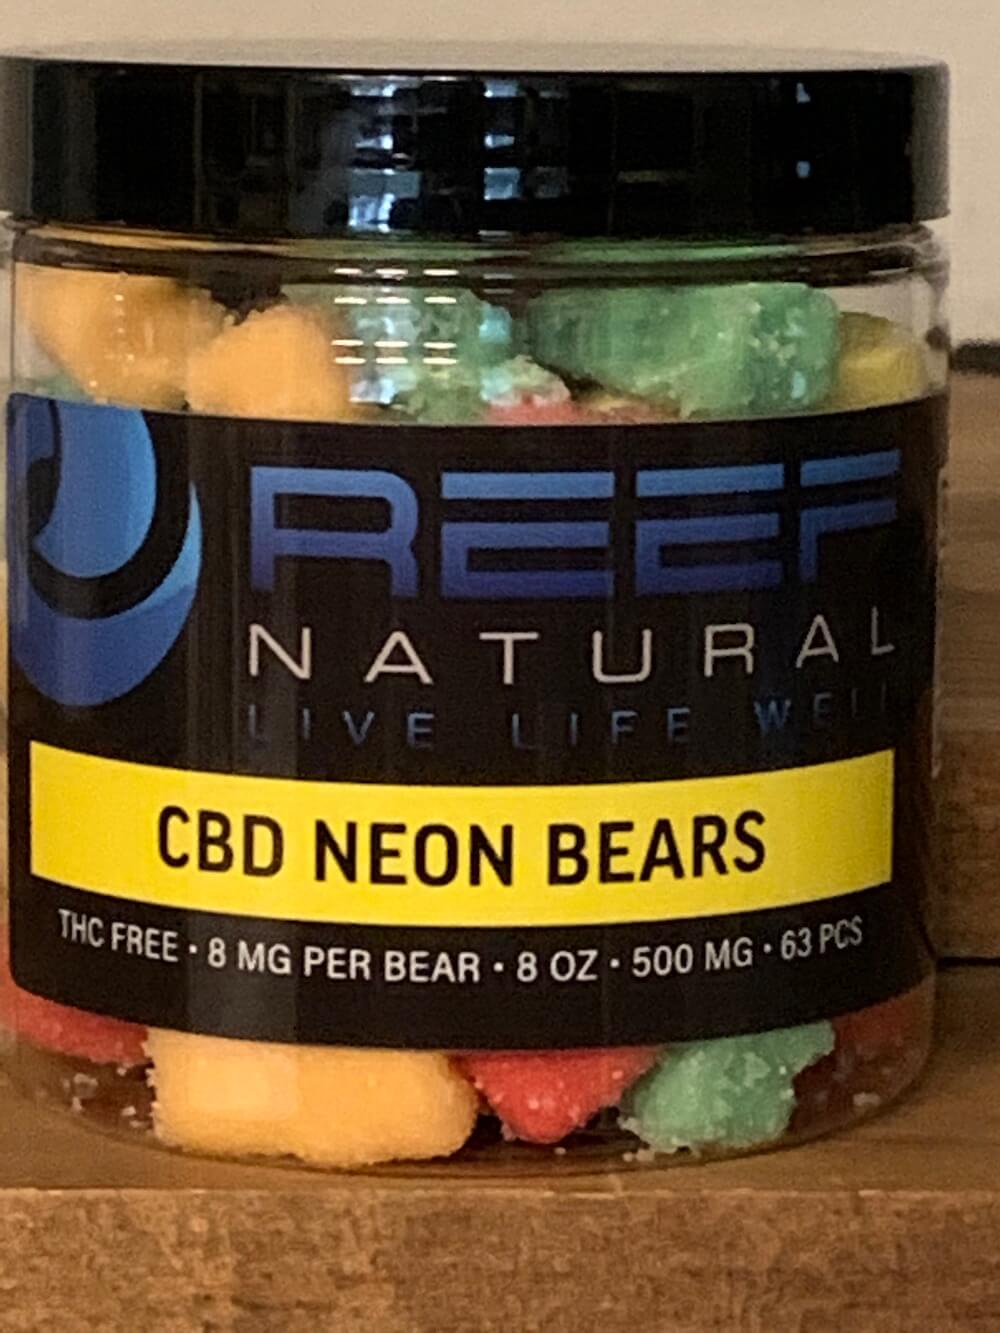 CBD isolate gummy bears